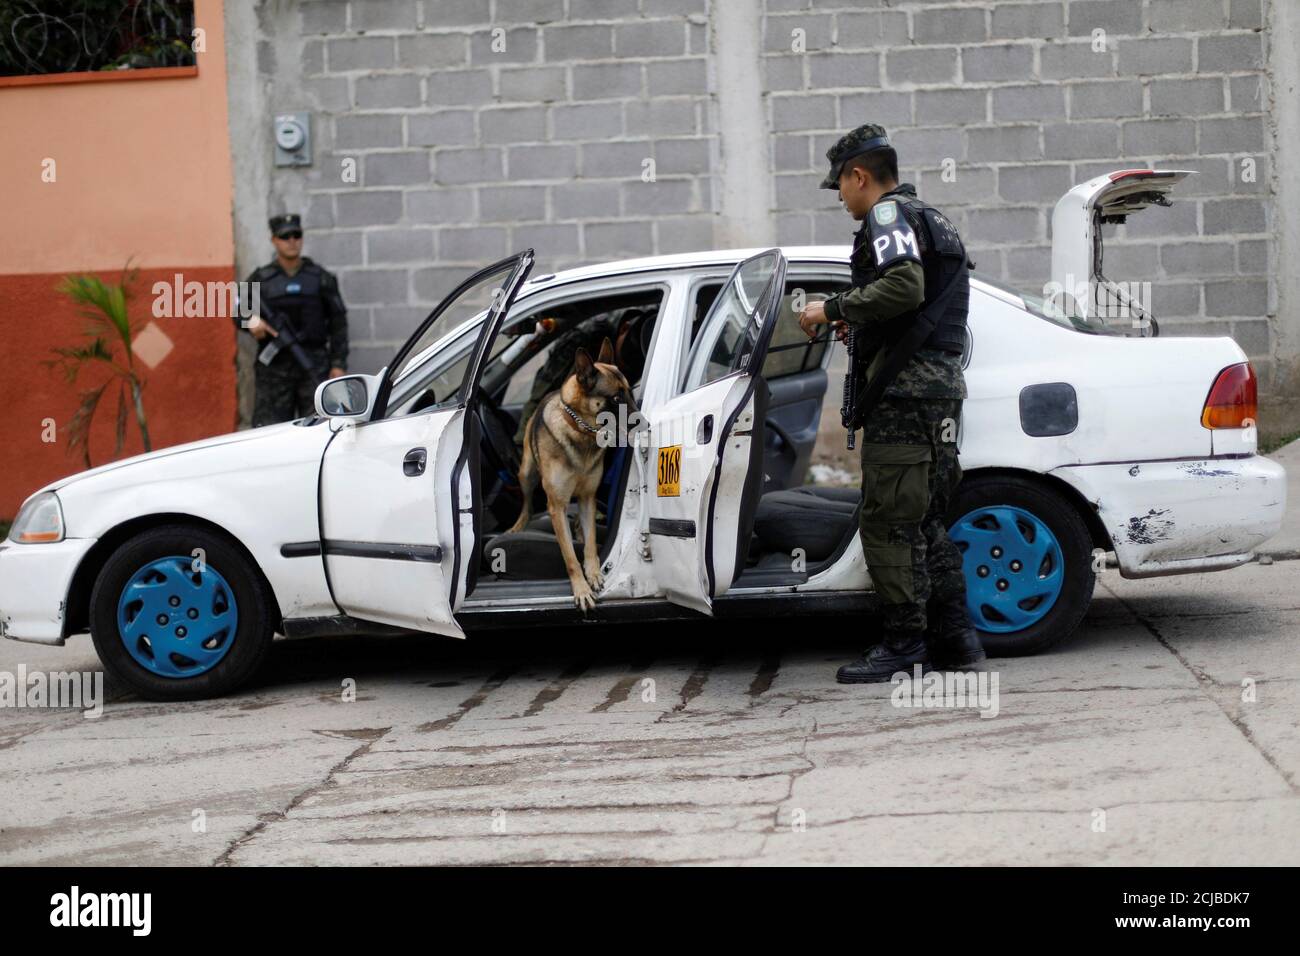 A soldier checks a car at a security post along a street as part of security measures for the November 26 presidential election in Tegucigalpa, Honduras November 23, 2017. REUTERS/Edgard Garrido Stock Photo